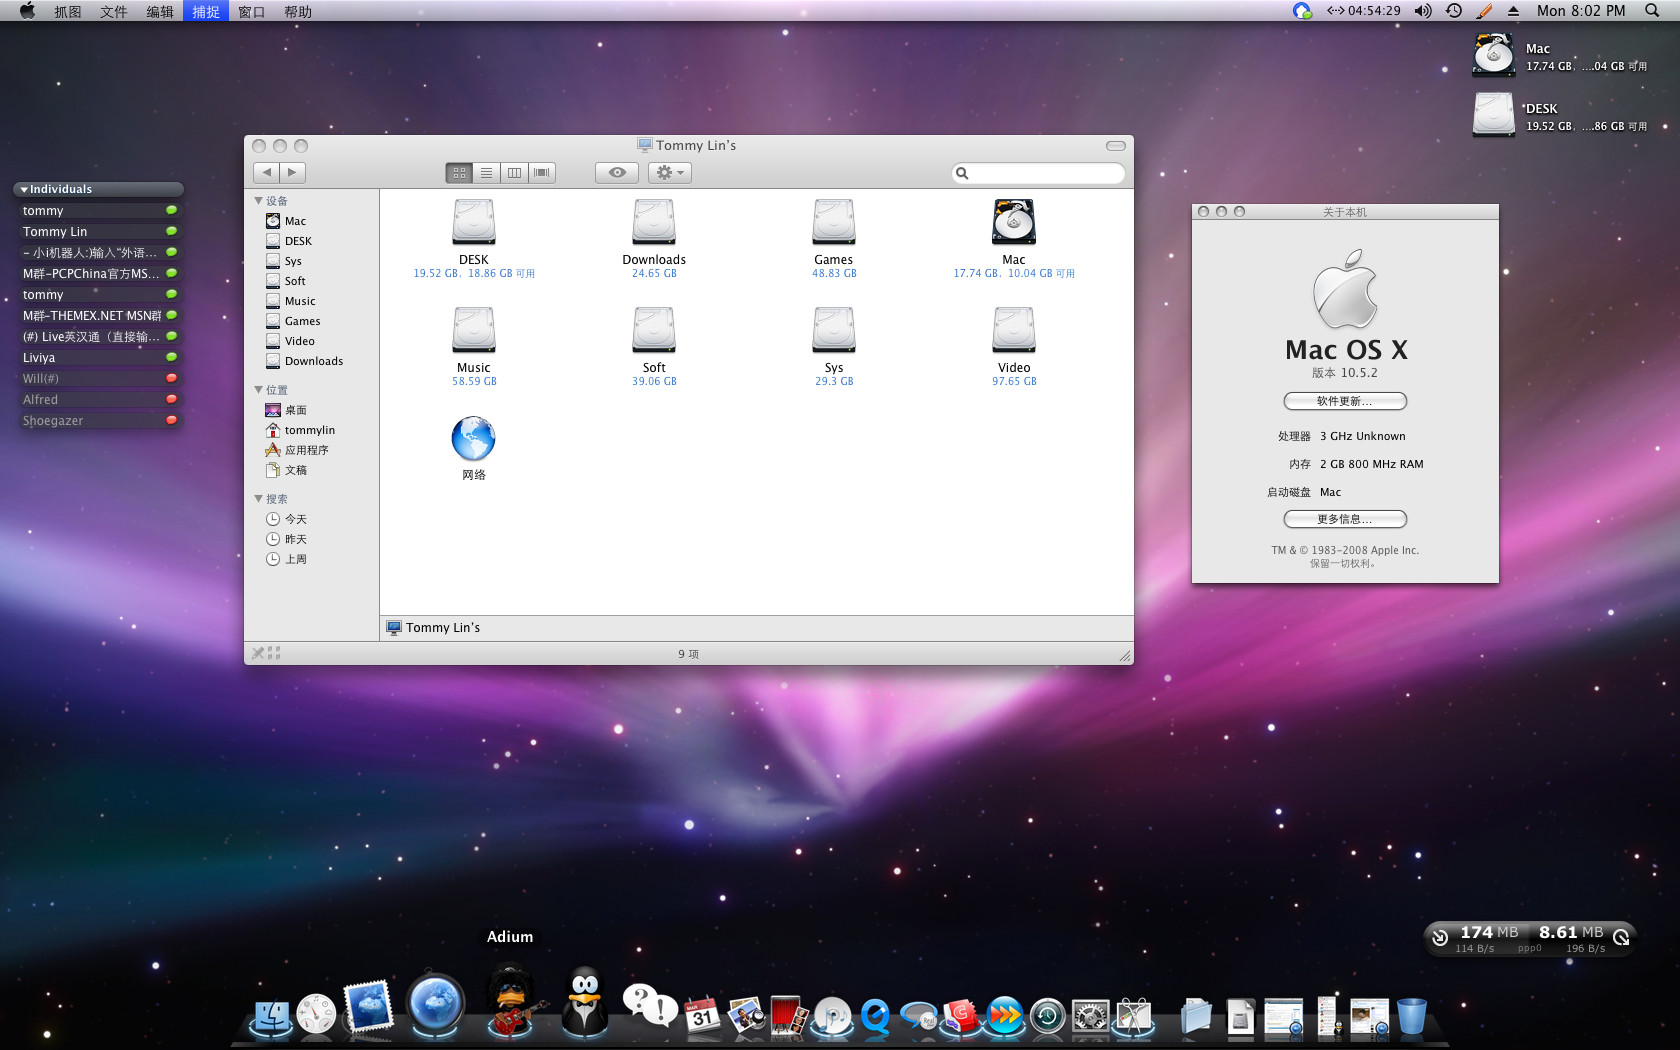 Download Mac Os X Snow Leopard 10.6.3 Dmg